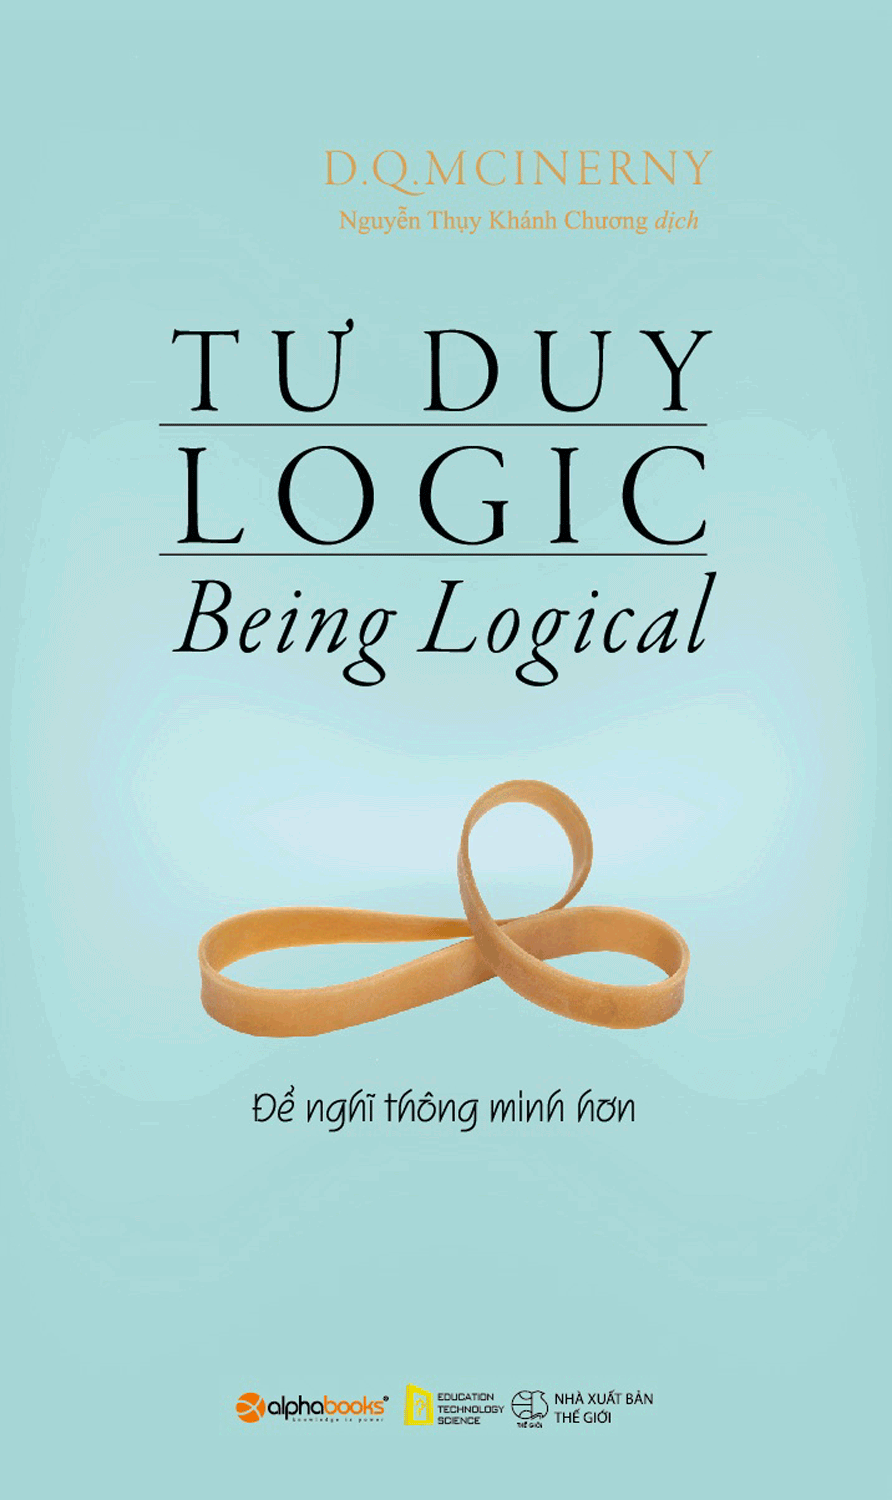 Tư duy logic (Ser Logical) (Phiên bản 2018)